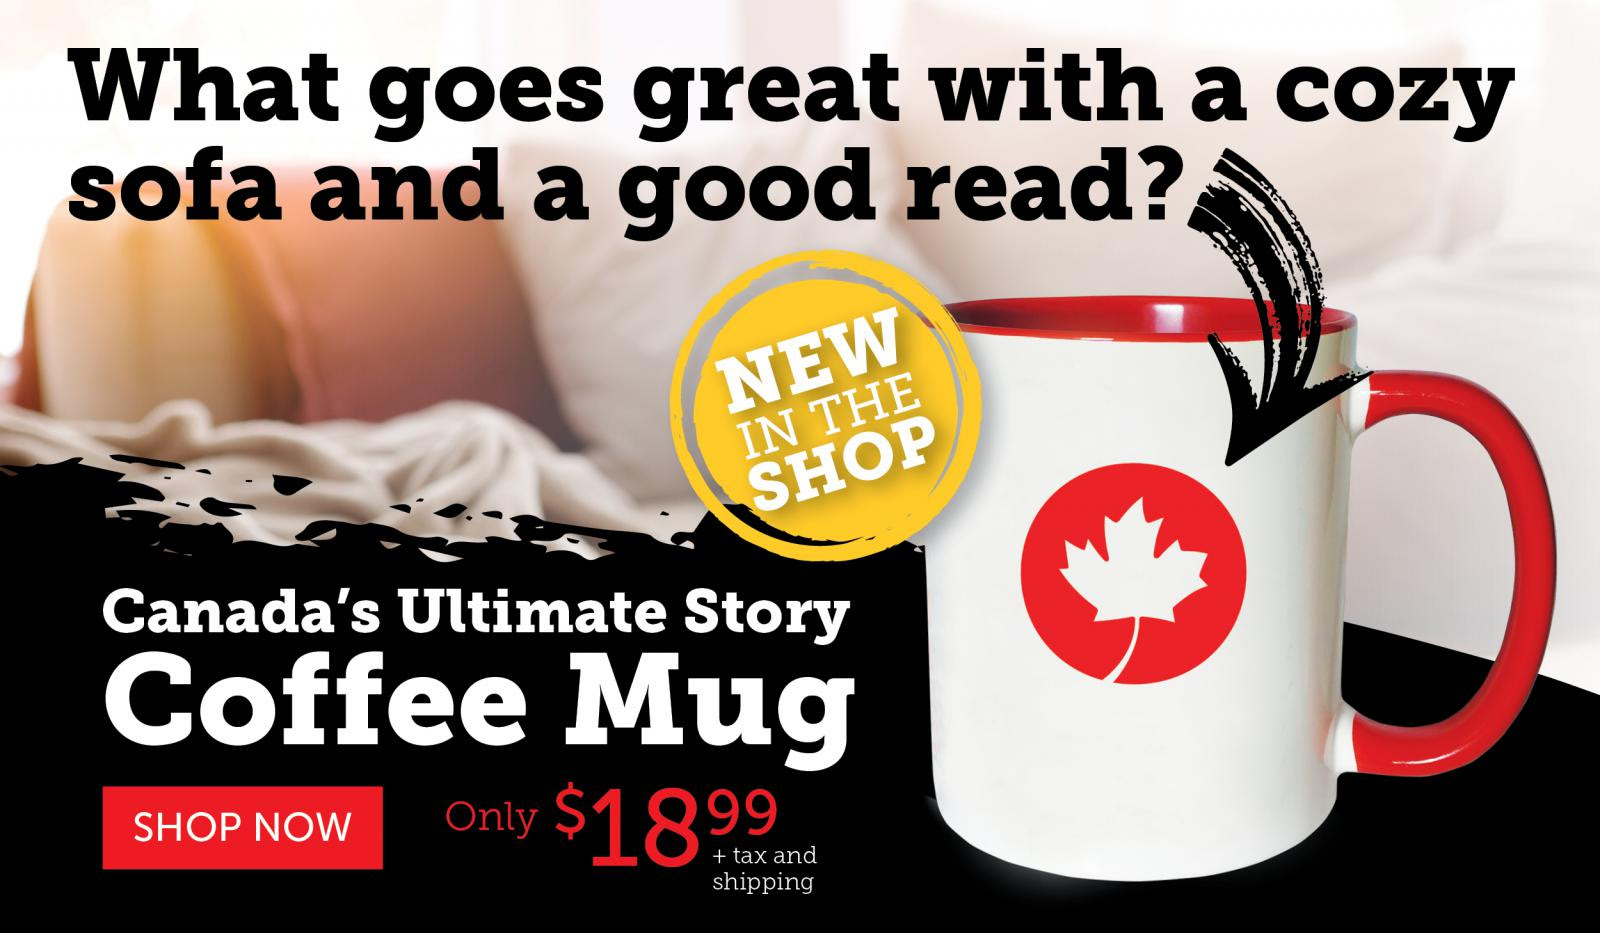 New Coffee Mug!